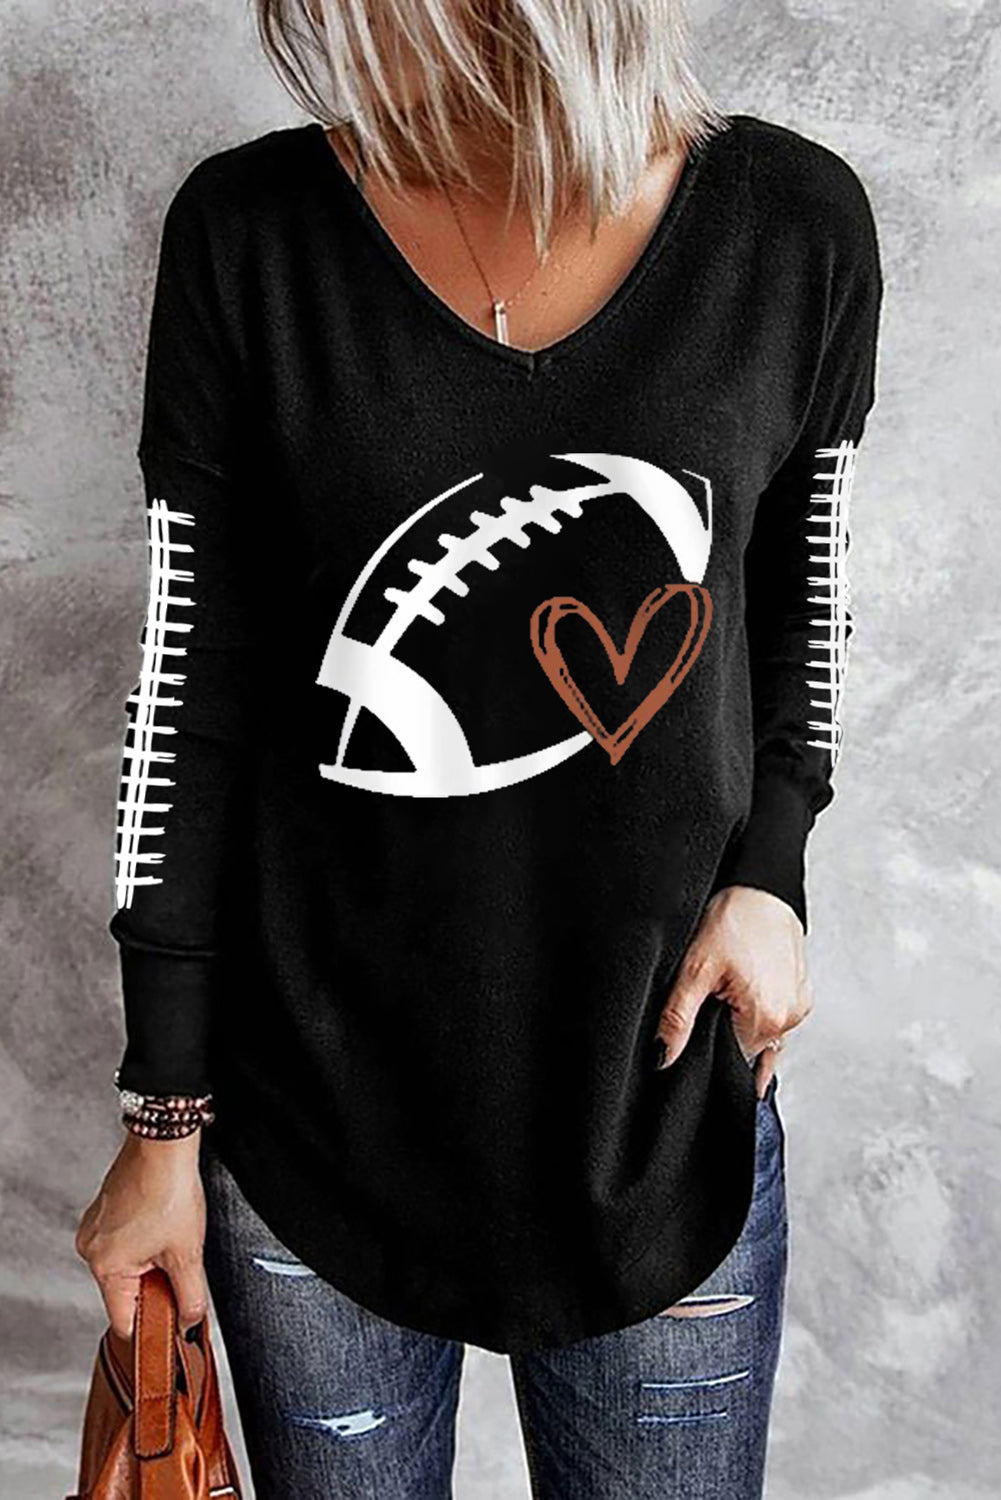 I Love Football Graphic Long Sleeve T-Shirt Tailgating T-shirt-Women's Premium Long Sleeve T-Shirt-PureDesignTees